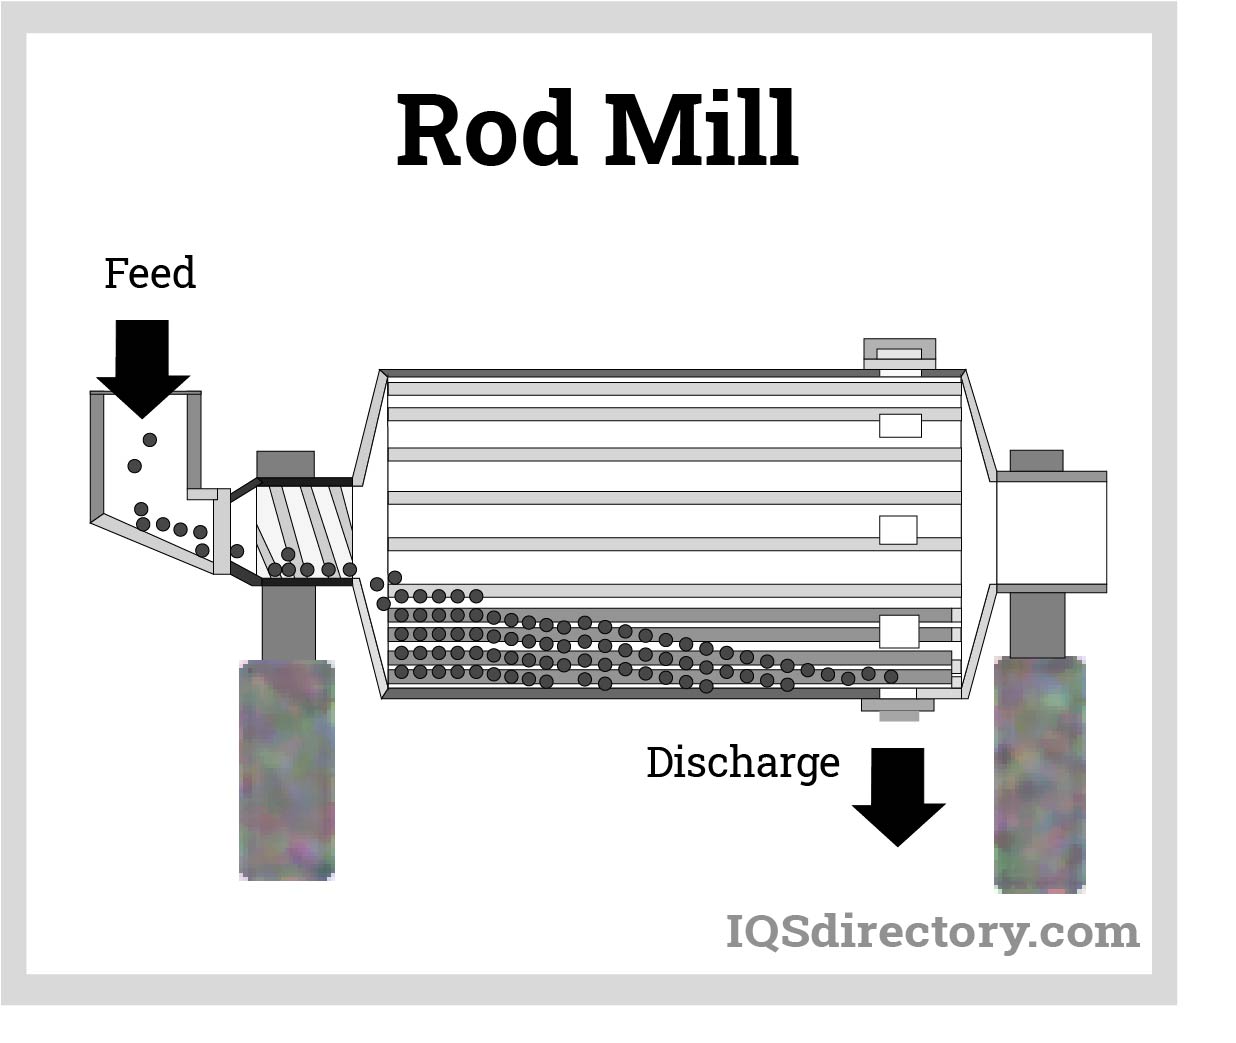 Rod Mill